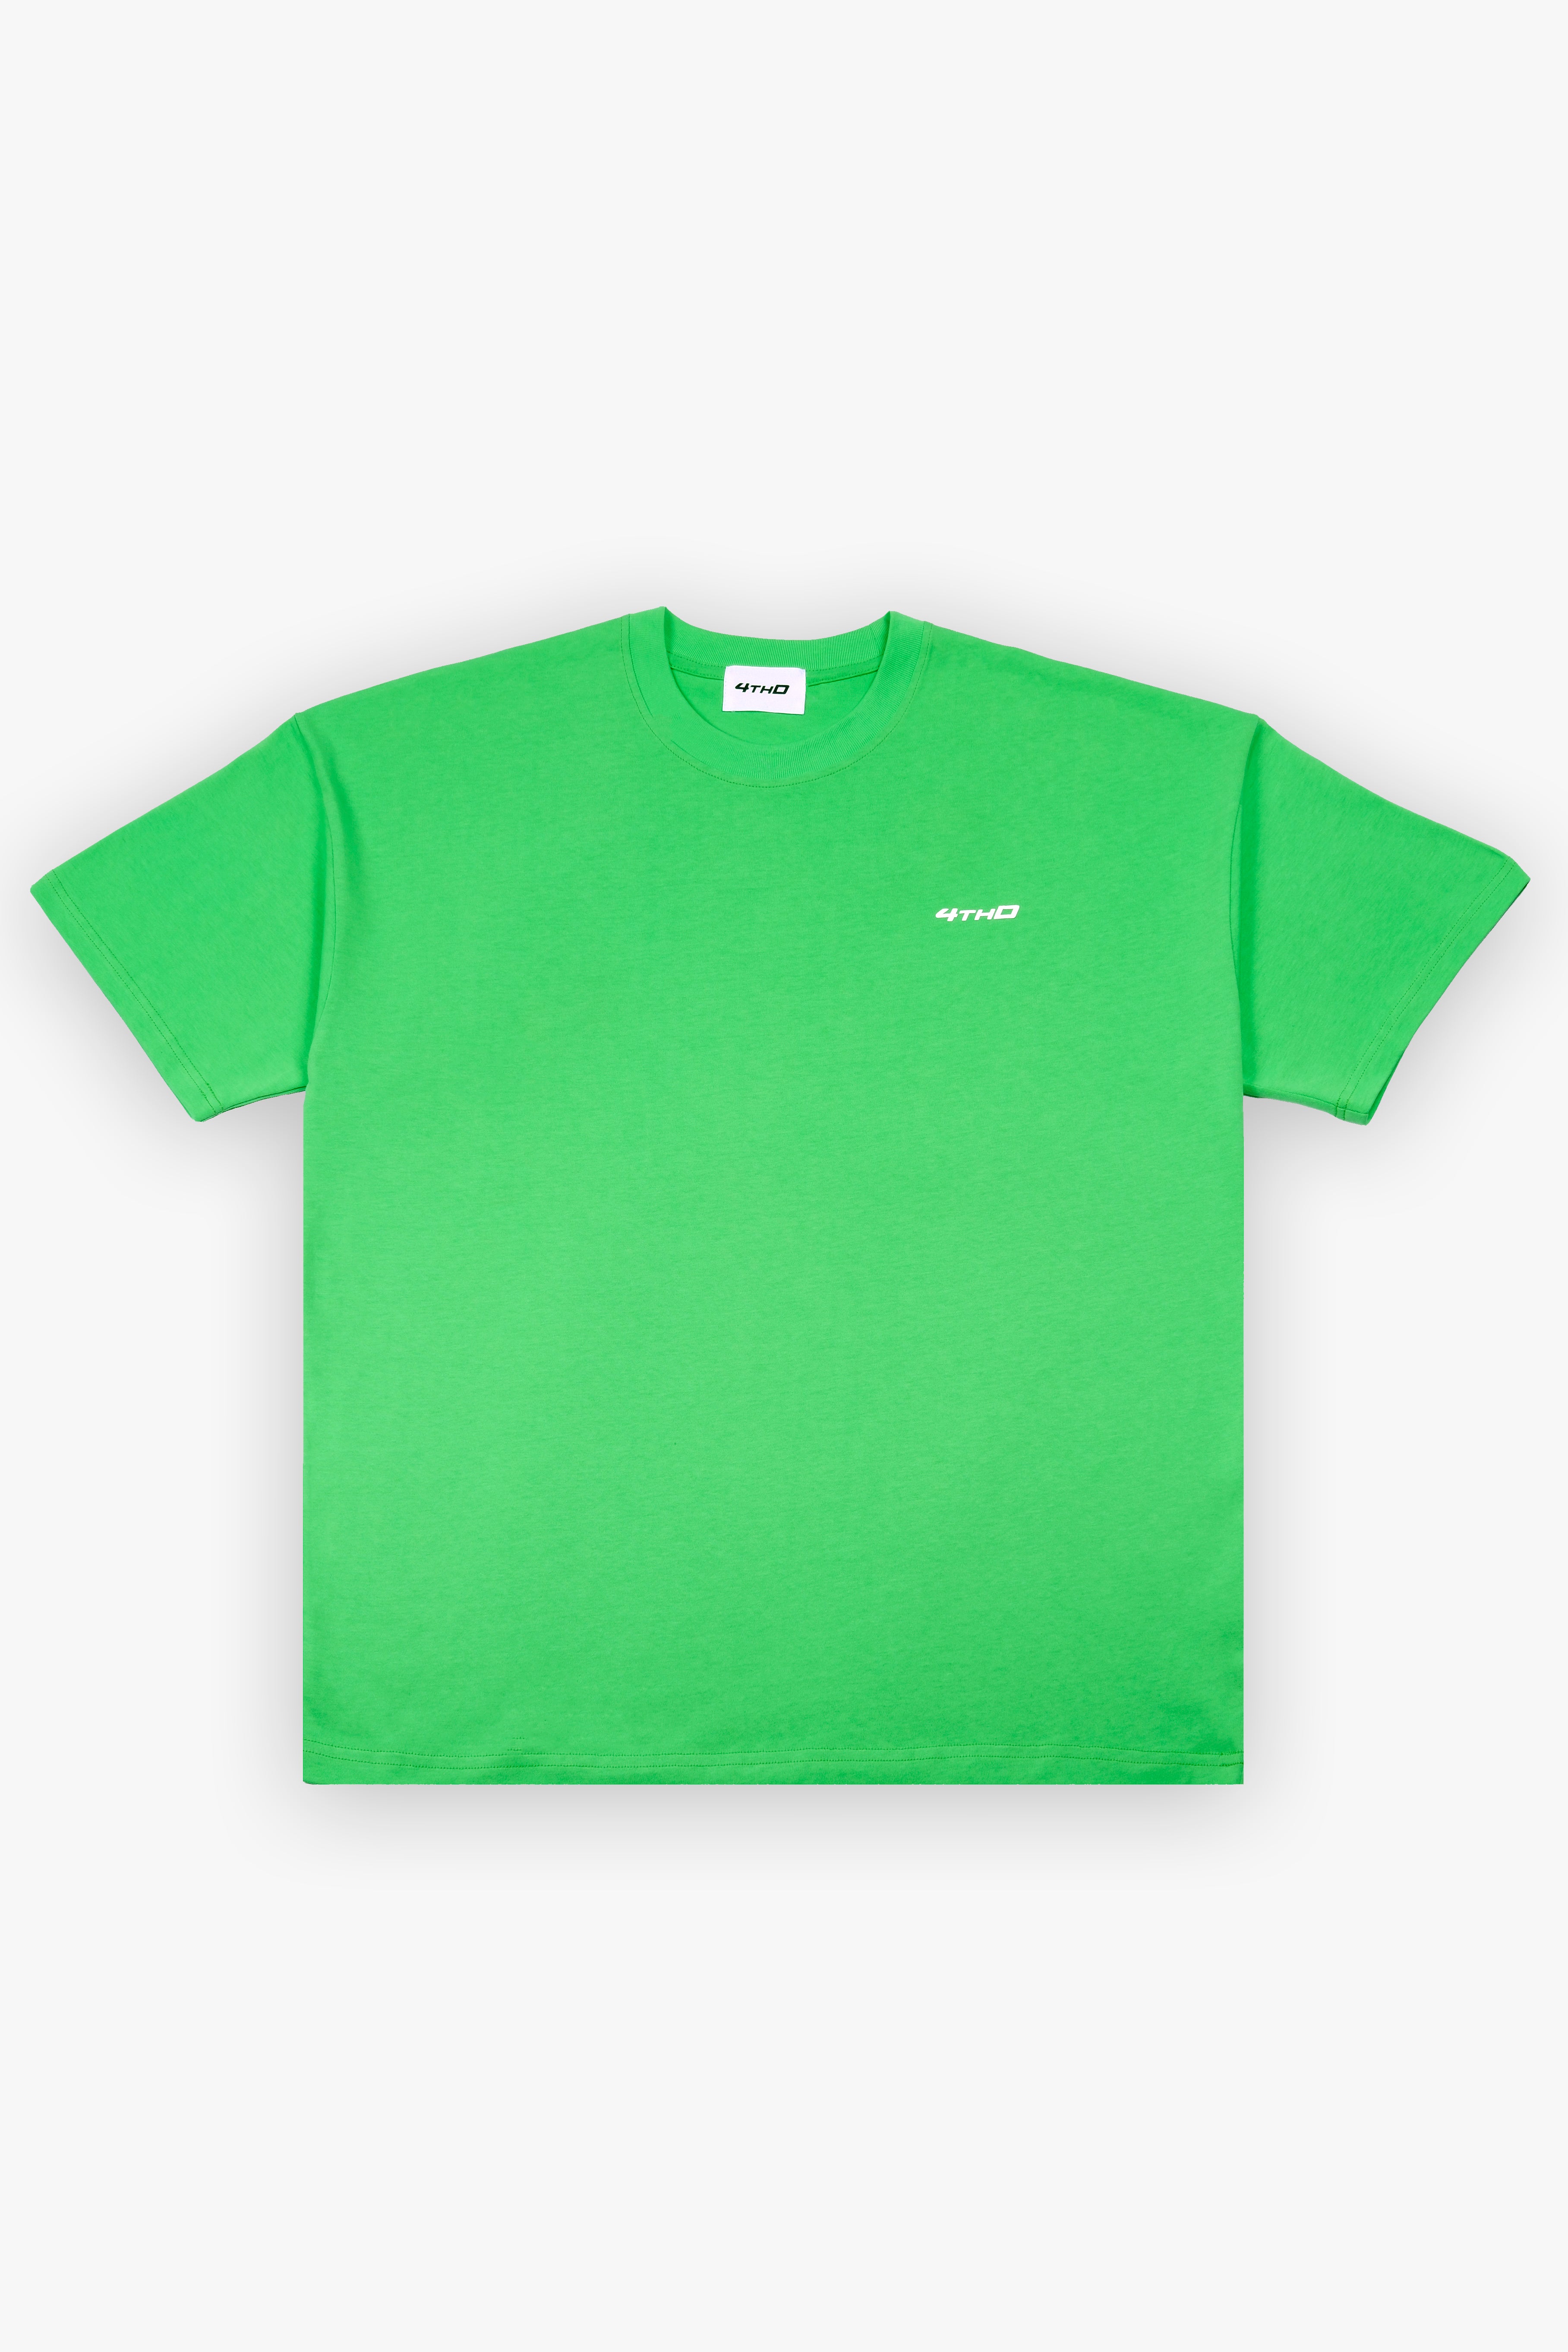 Pantone Shirt - Green